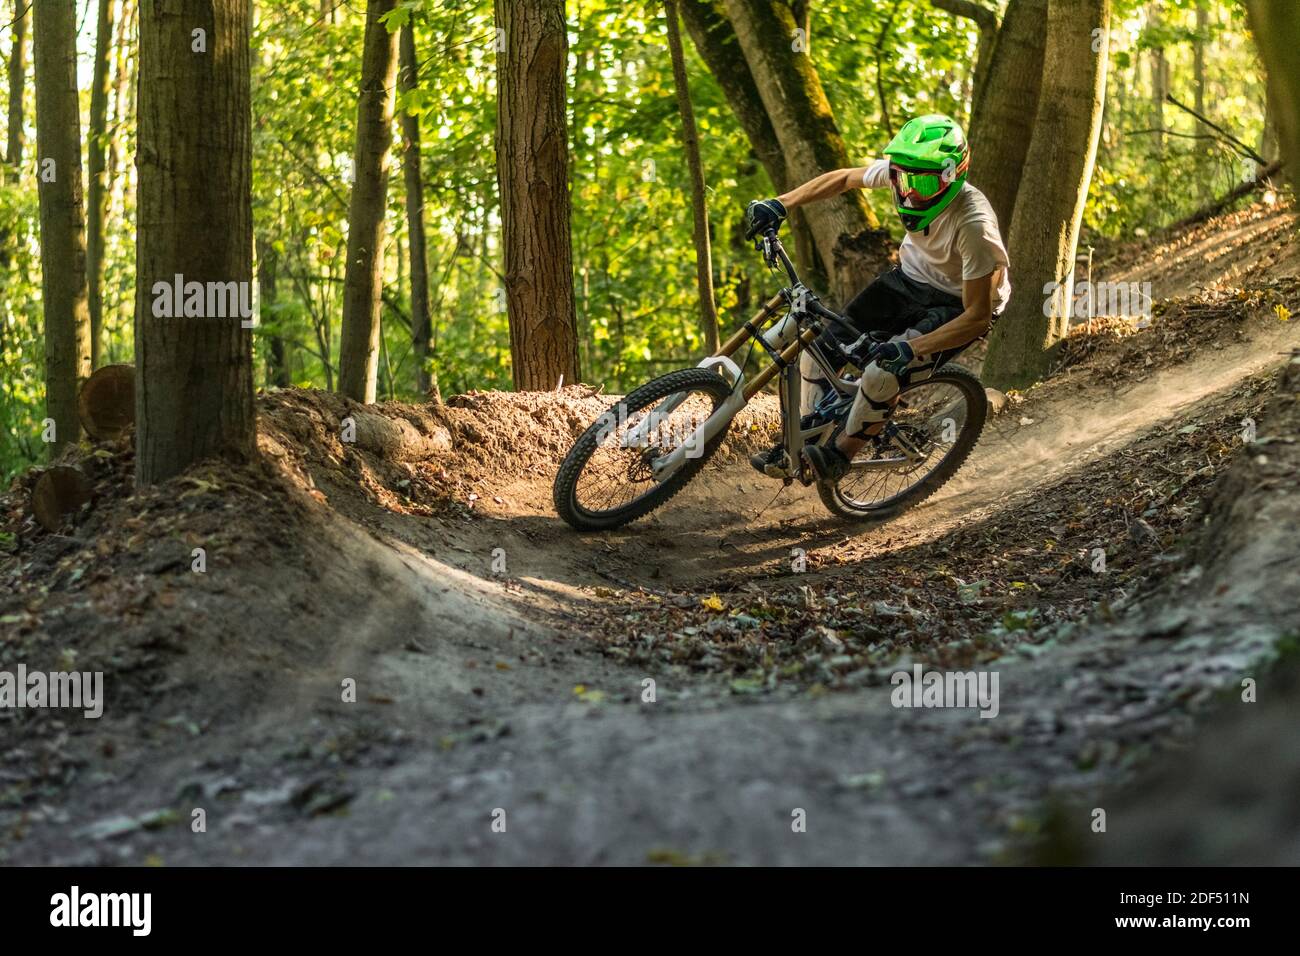 Downhill mountain biker in motion crossing trails. Stock Photo